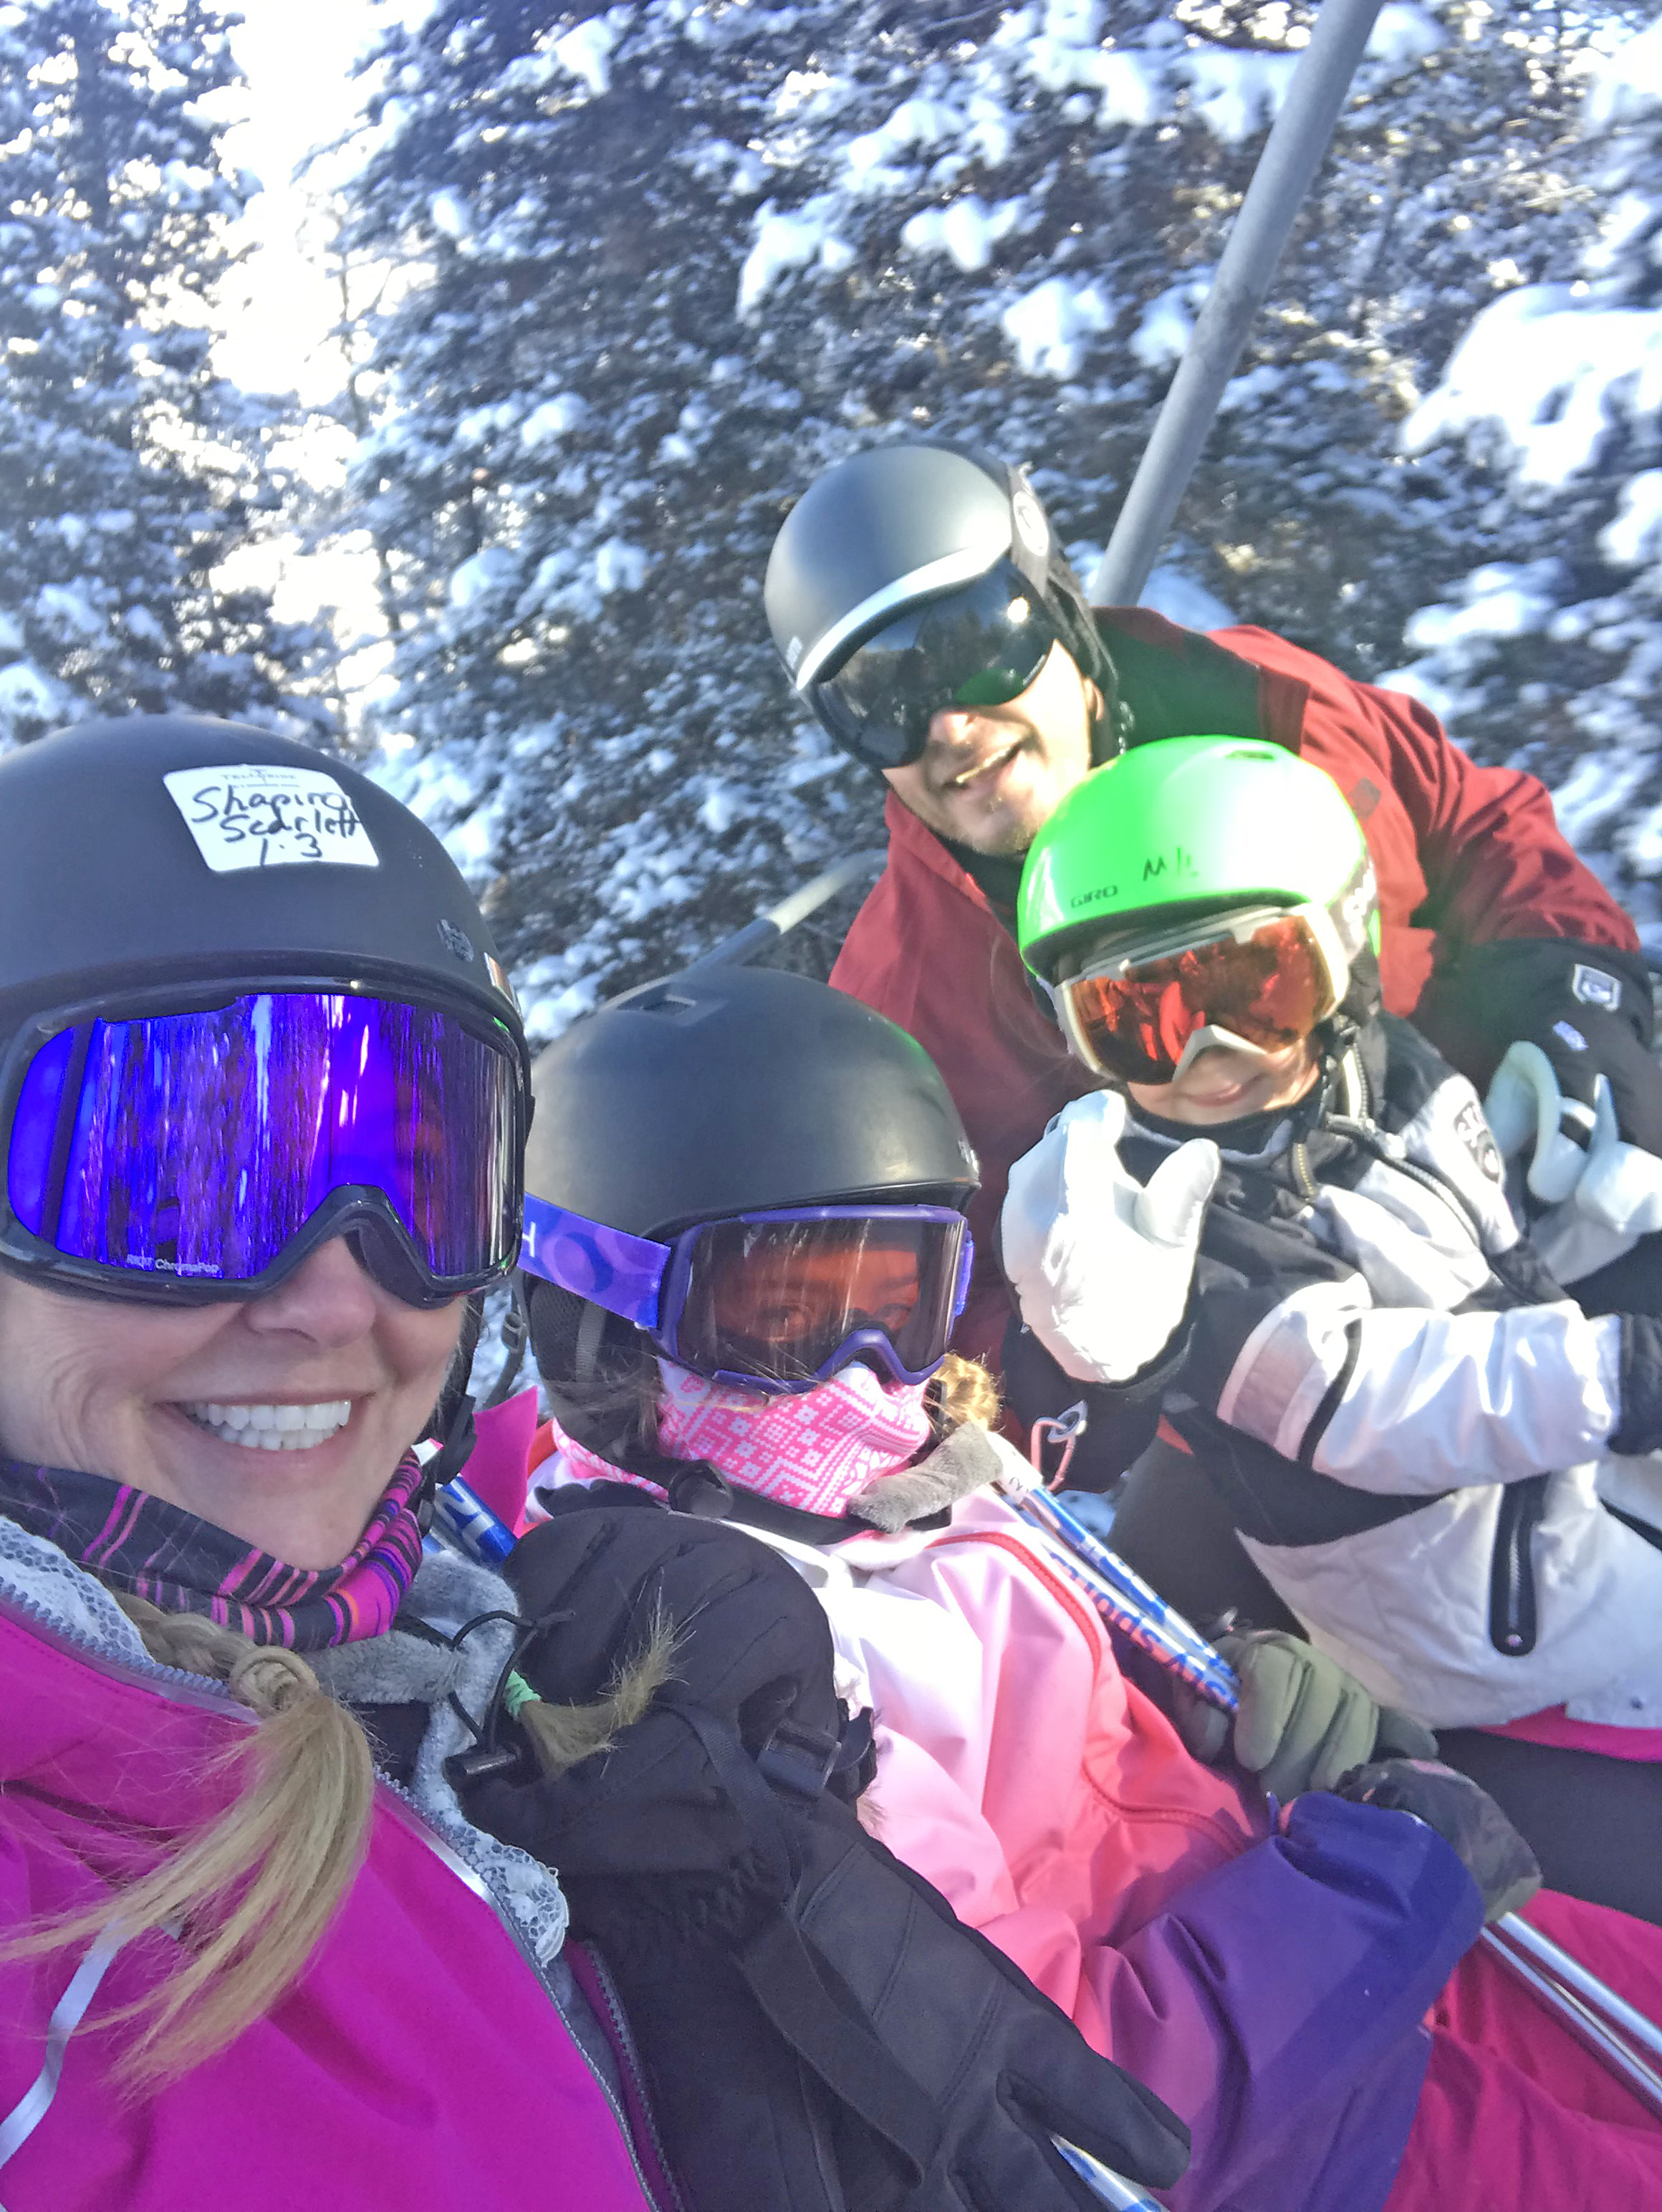 Annual ski trip fun!